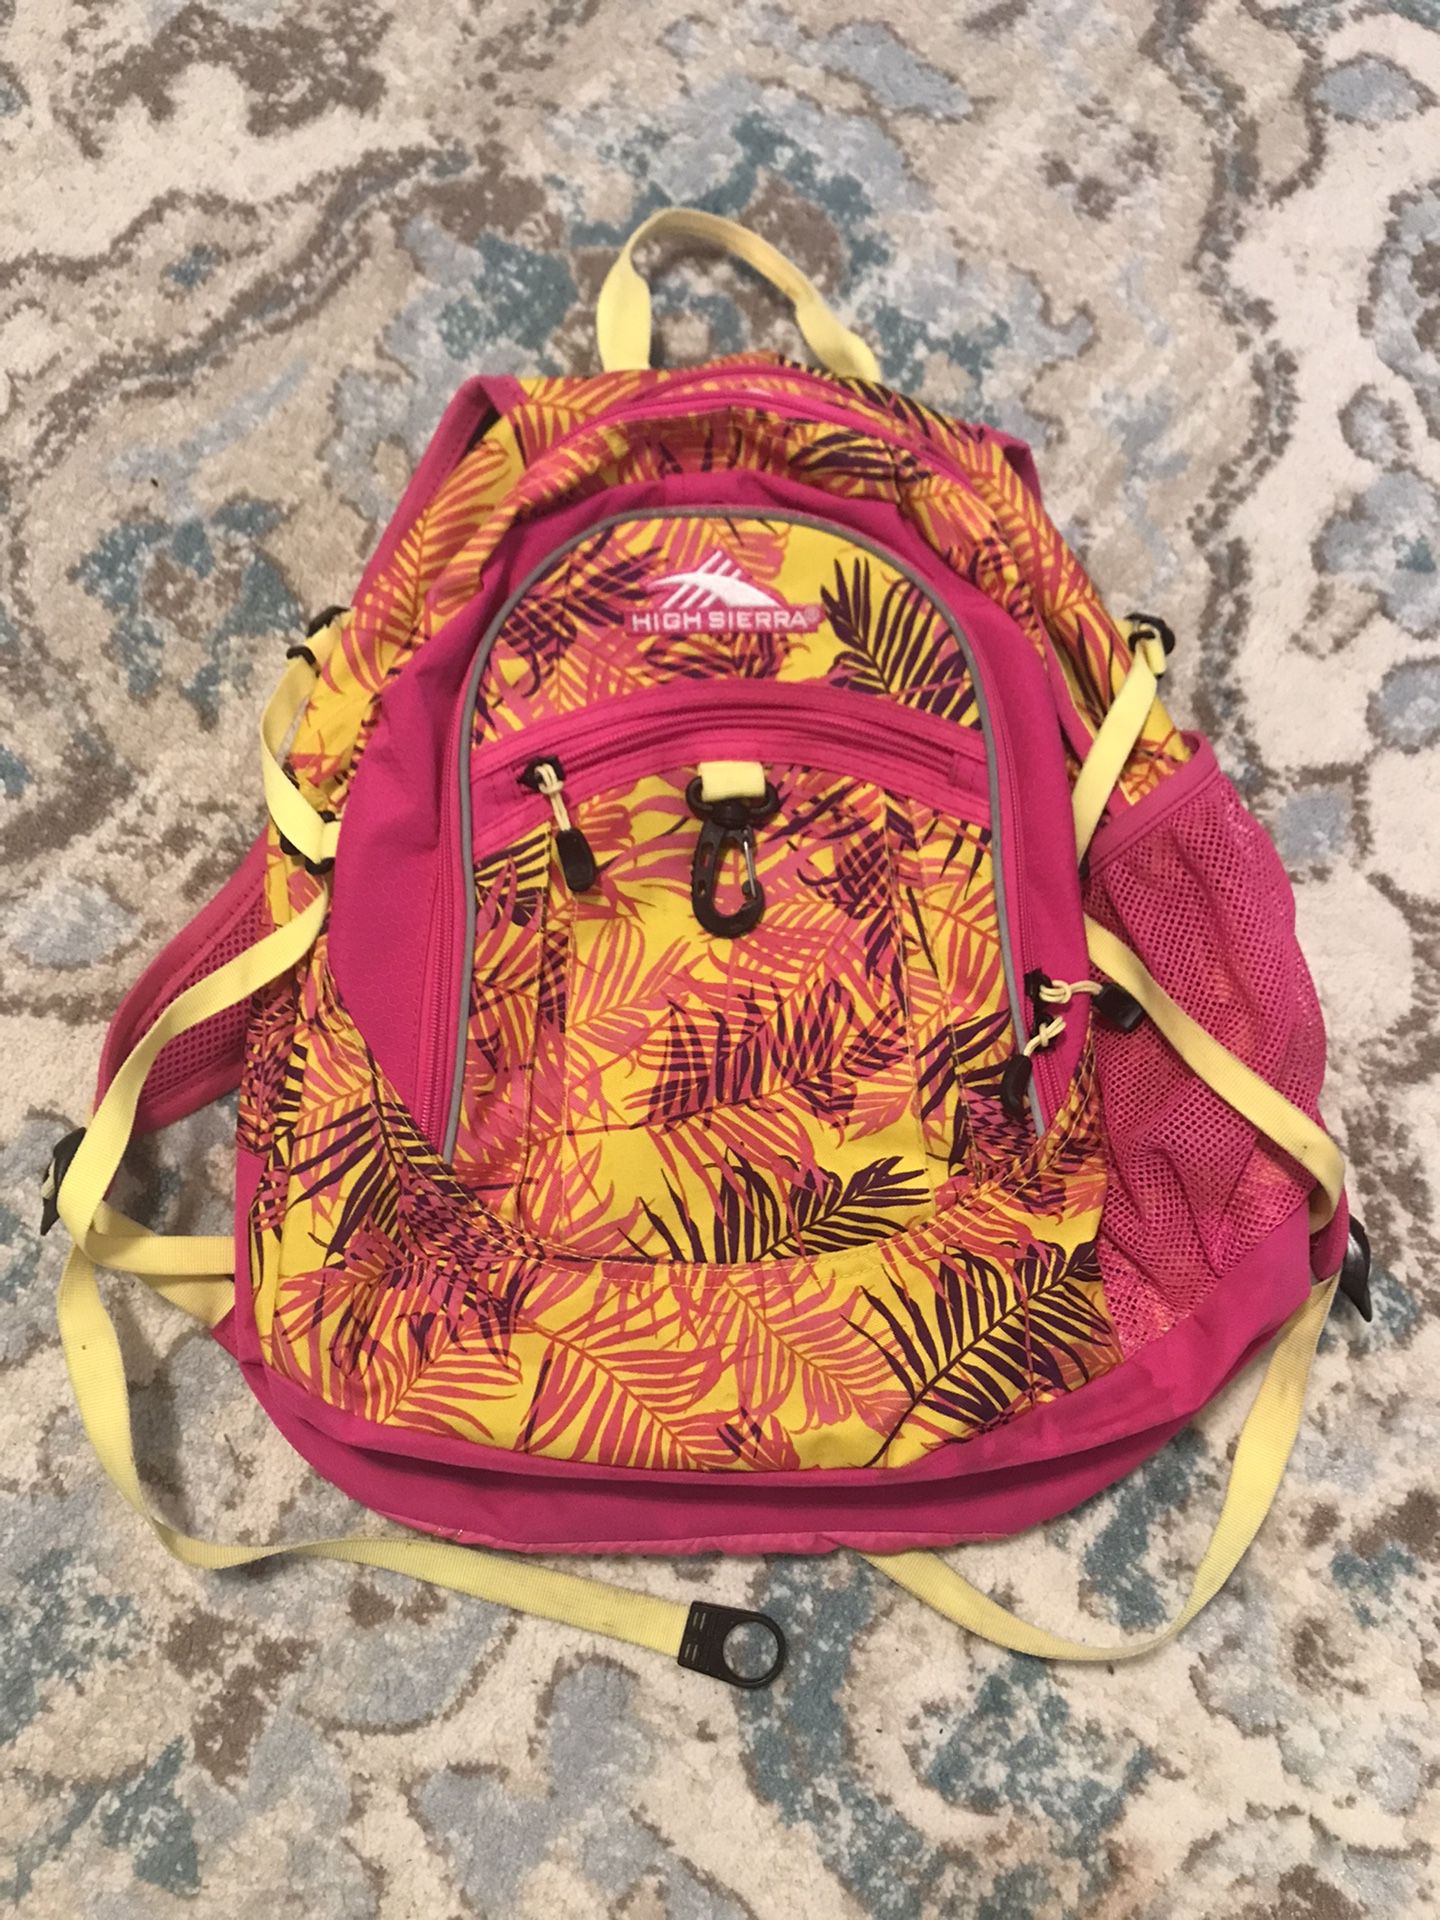 HIGH SIERRA SUSPENSION STRAP SYSTEM Backpack Unisex Hiking Gear Travel Bag